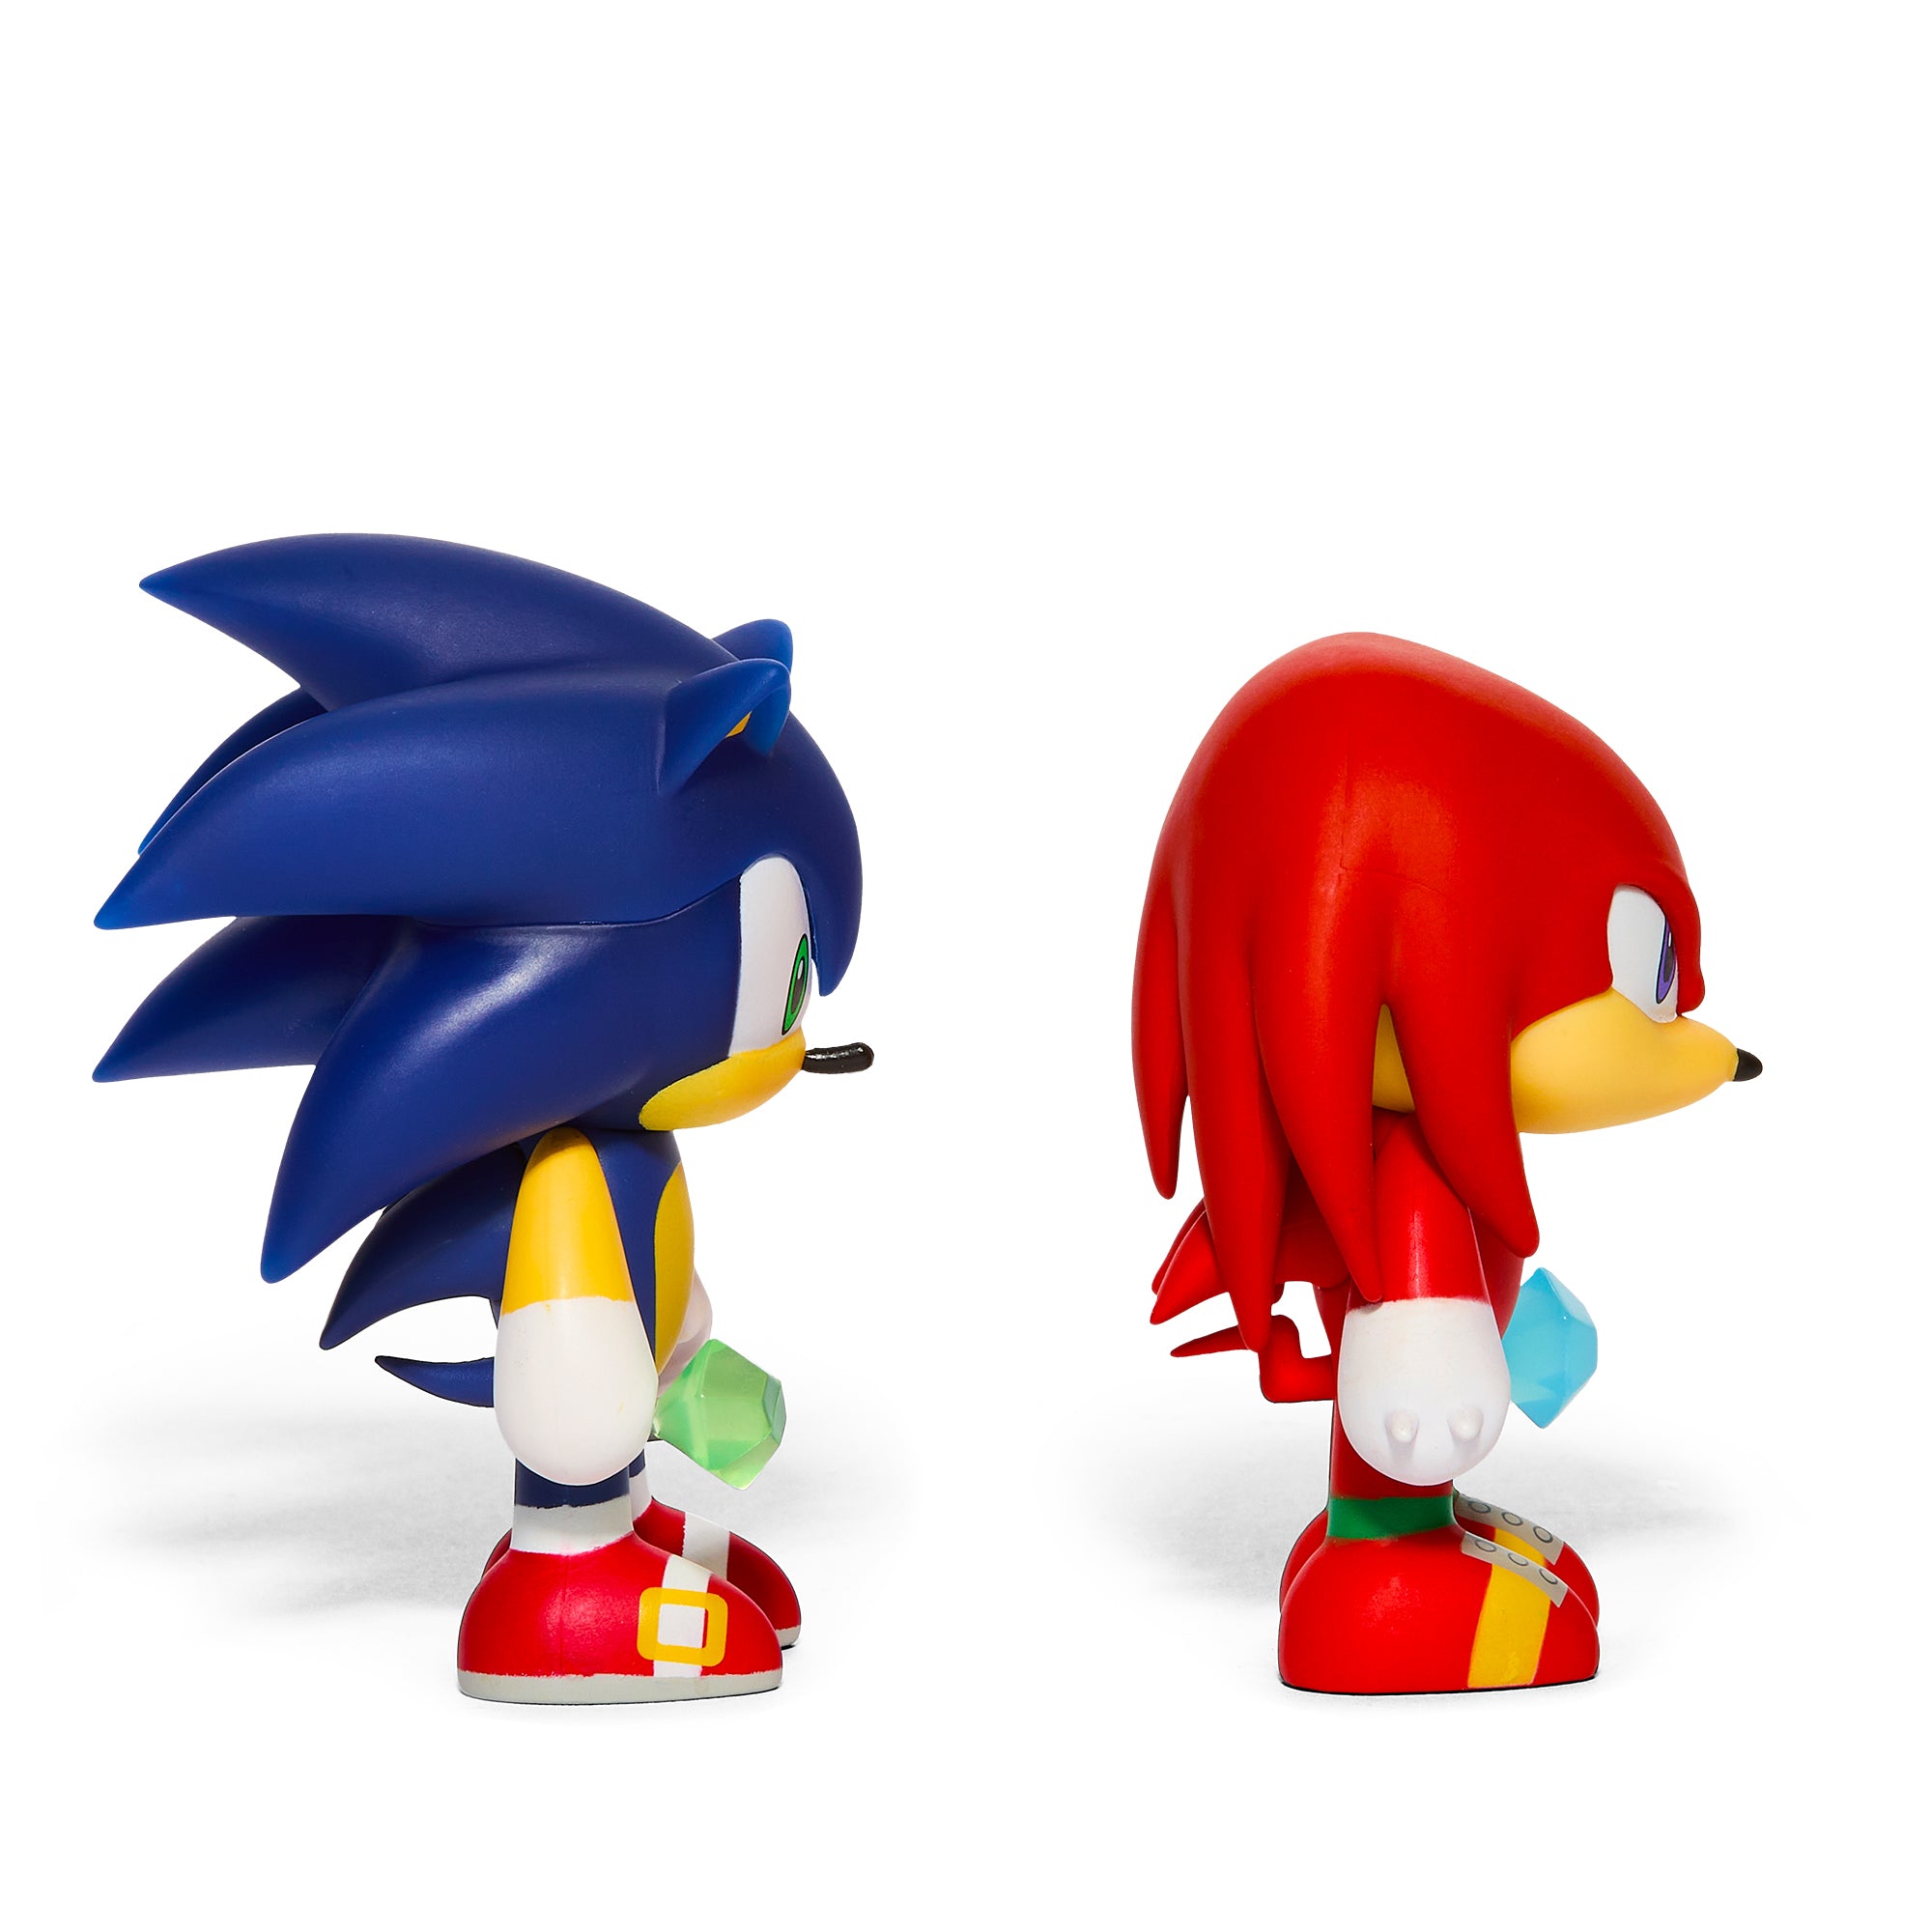 Sonic The Hedgehog 3 Super Figure 3-Pack